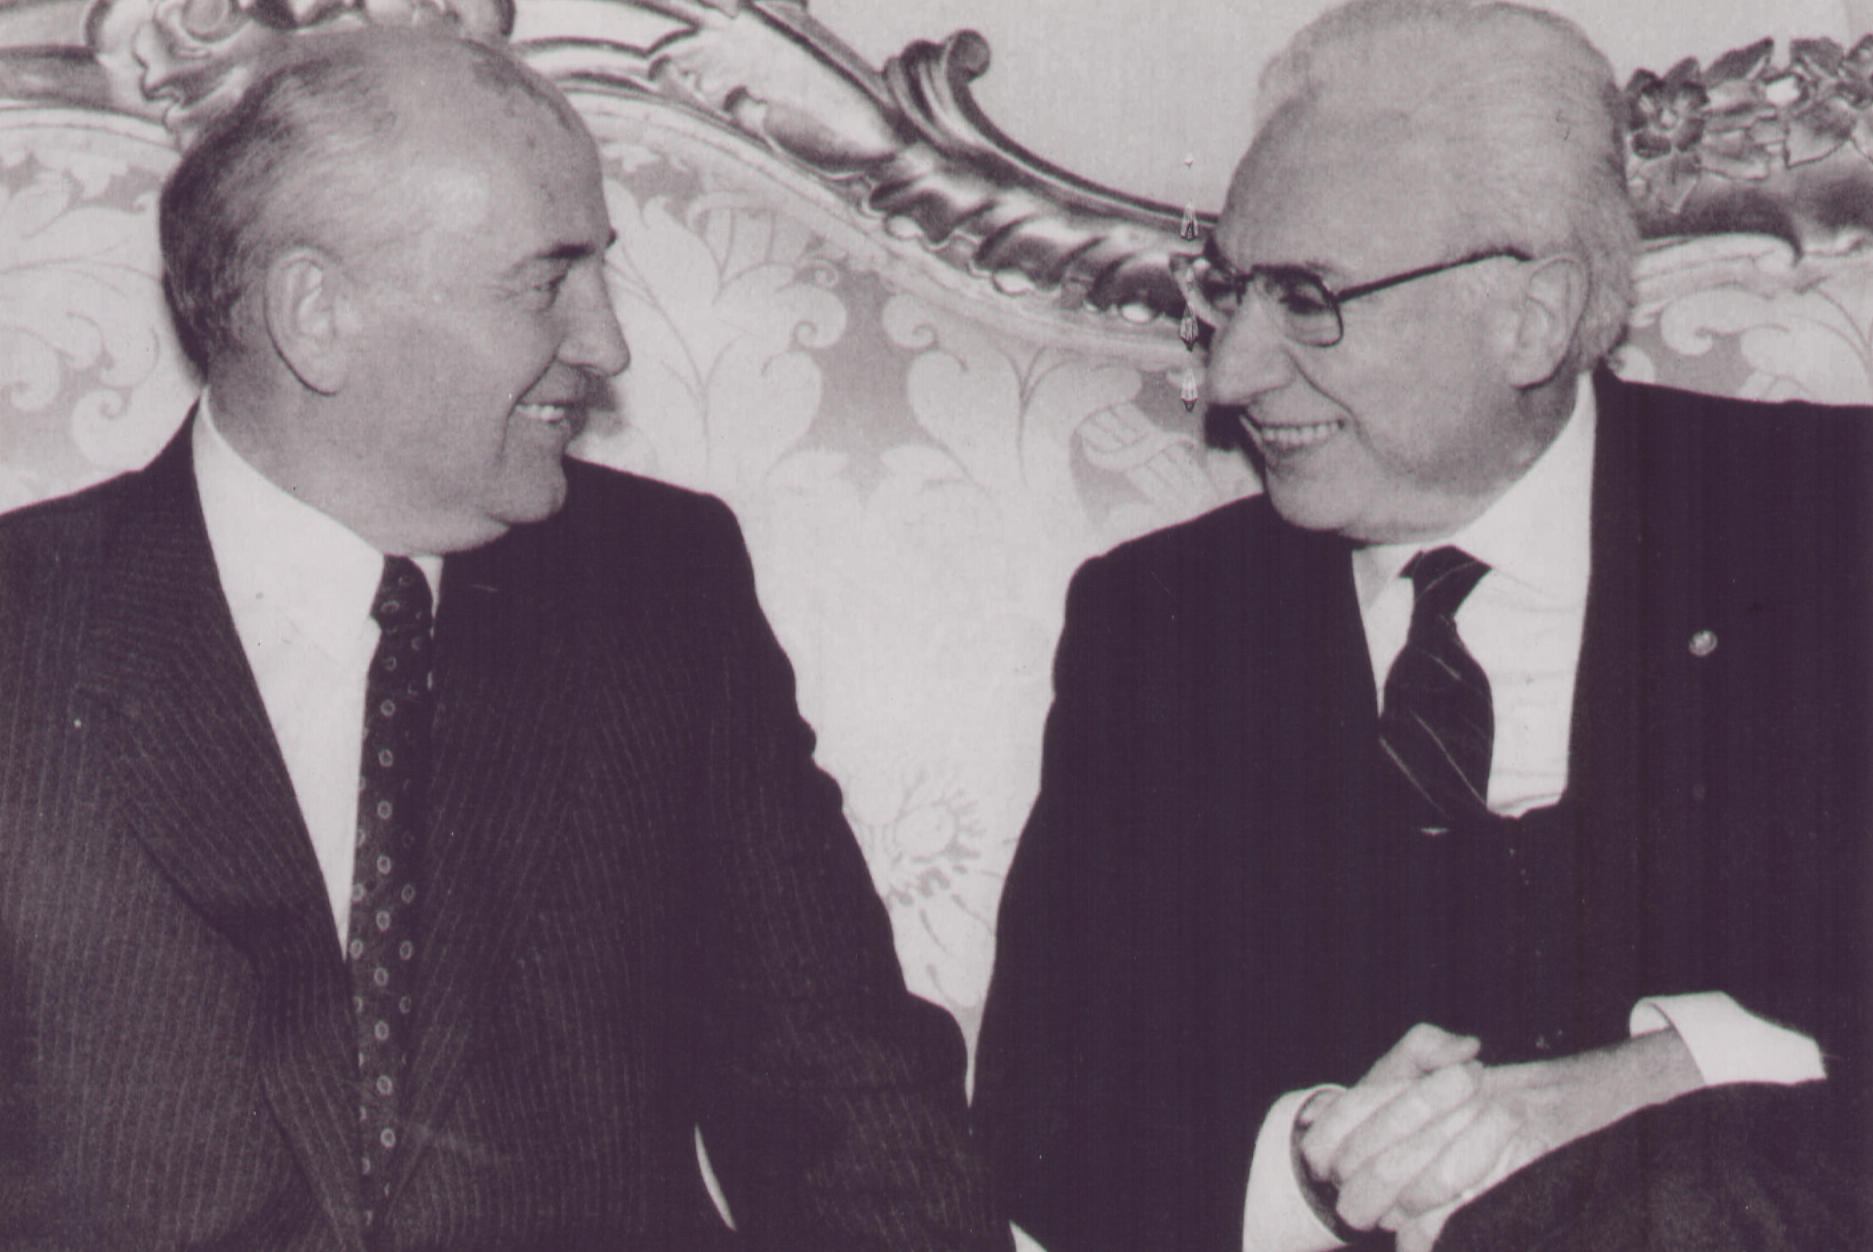   1989. Con il Presidente Michail Gorbachev.